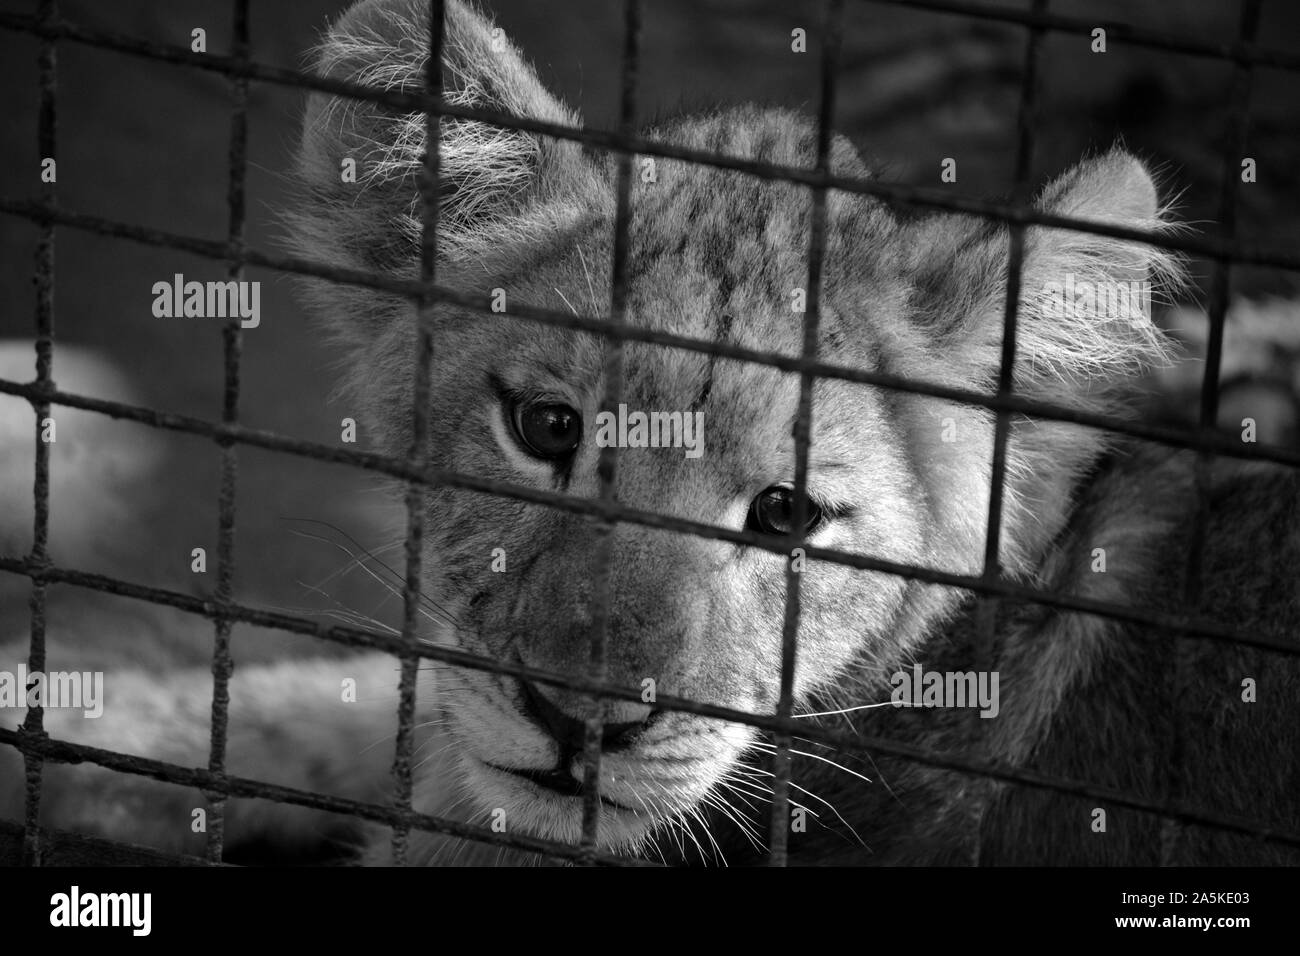 Lion Cub Caged Foto Stock